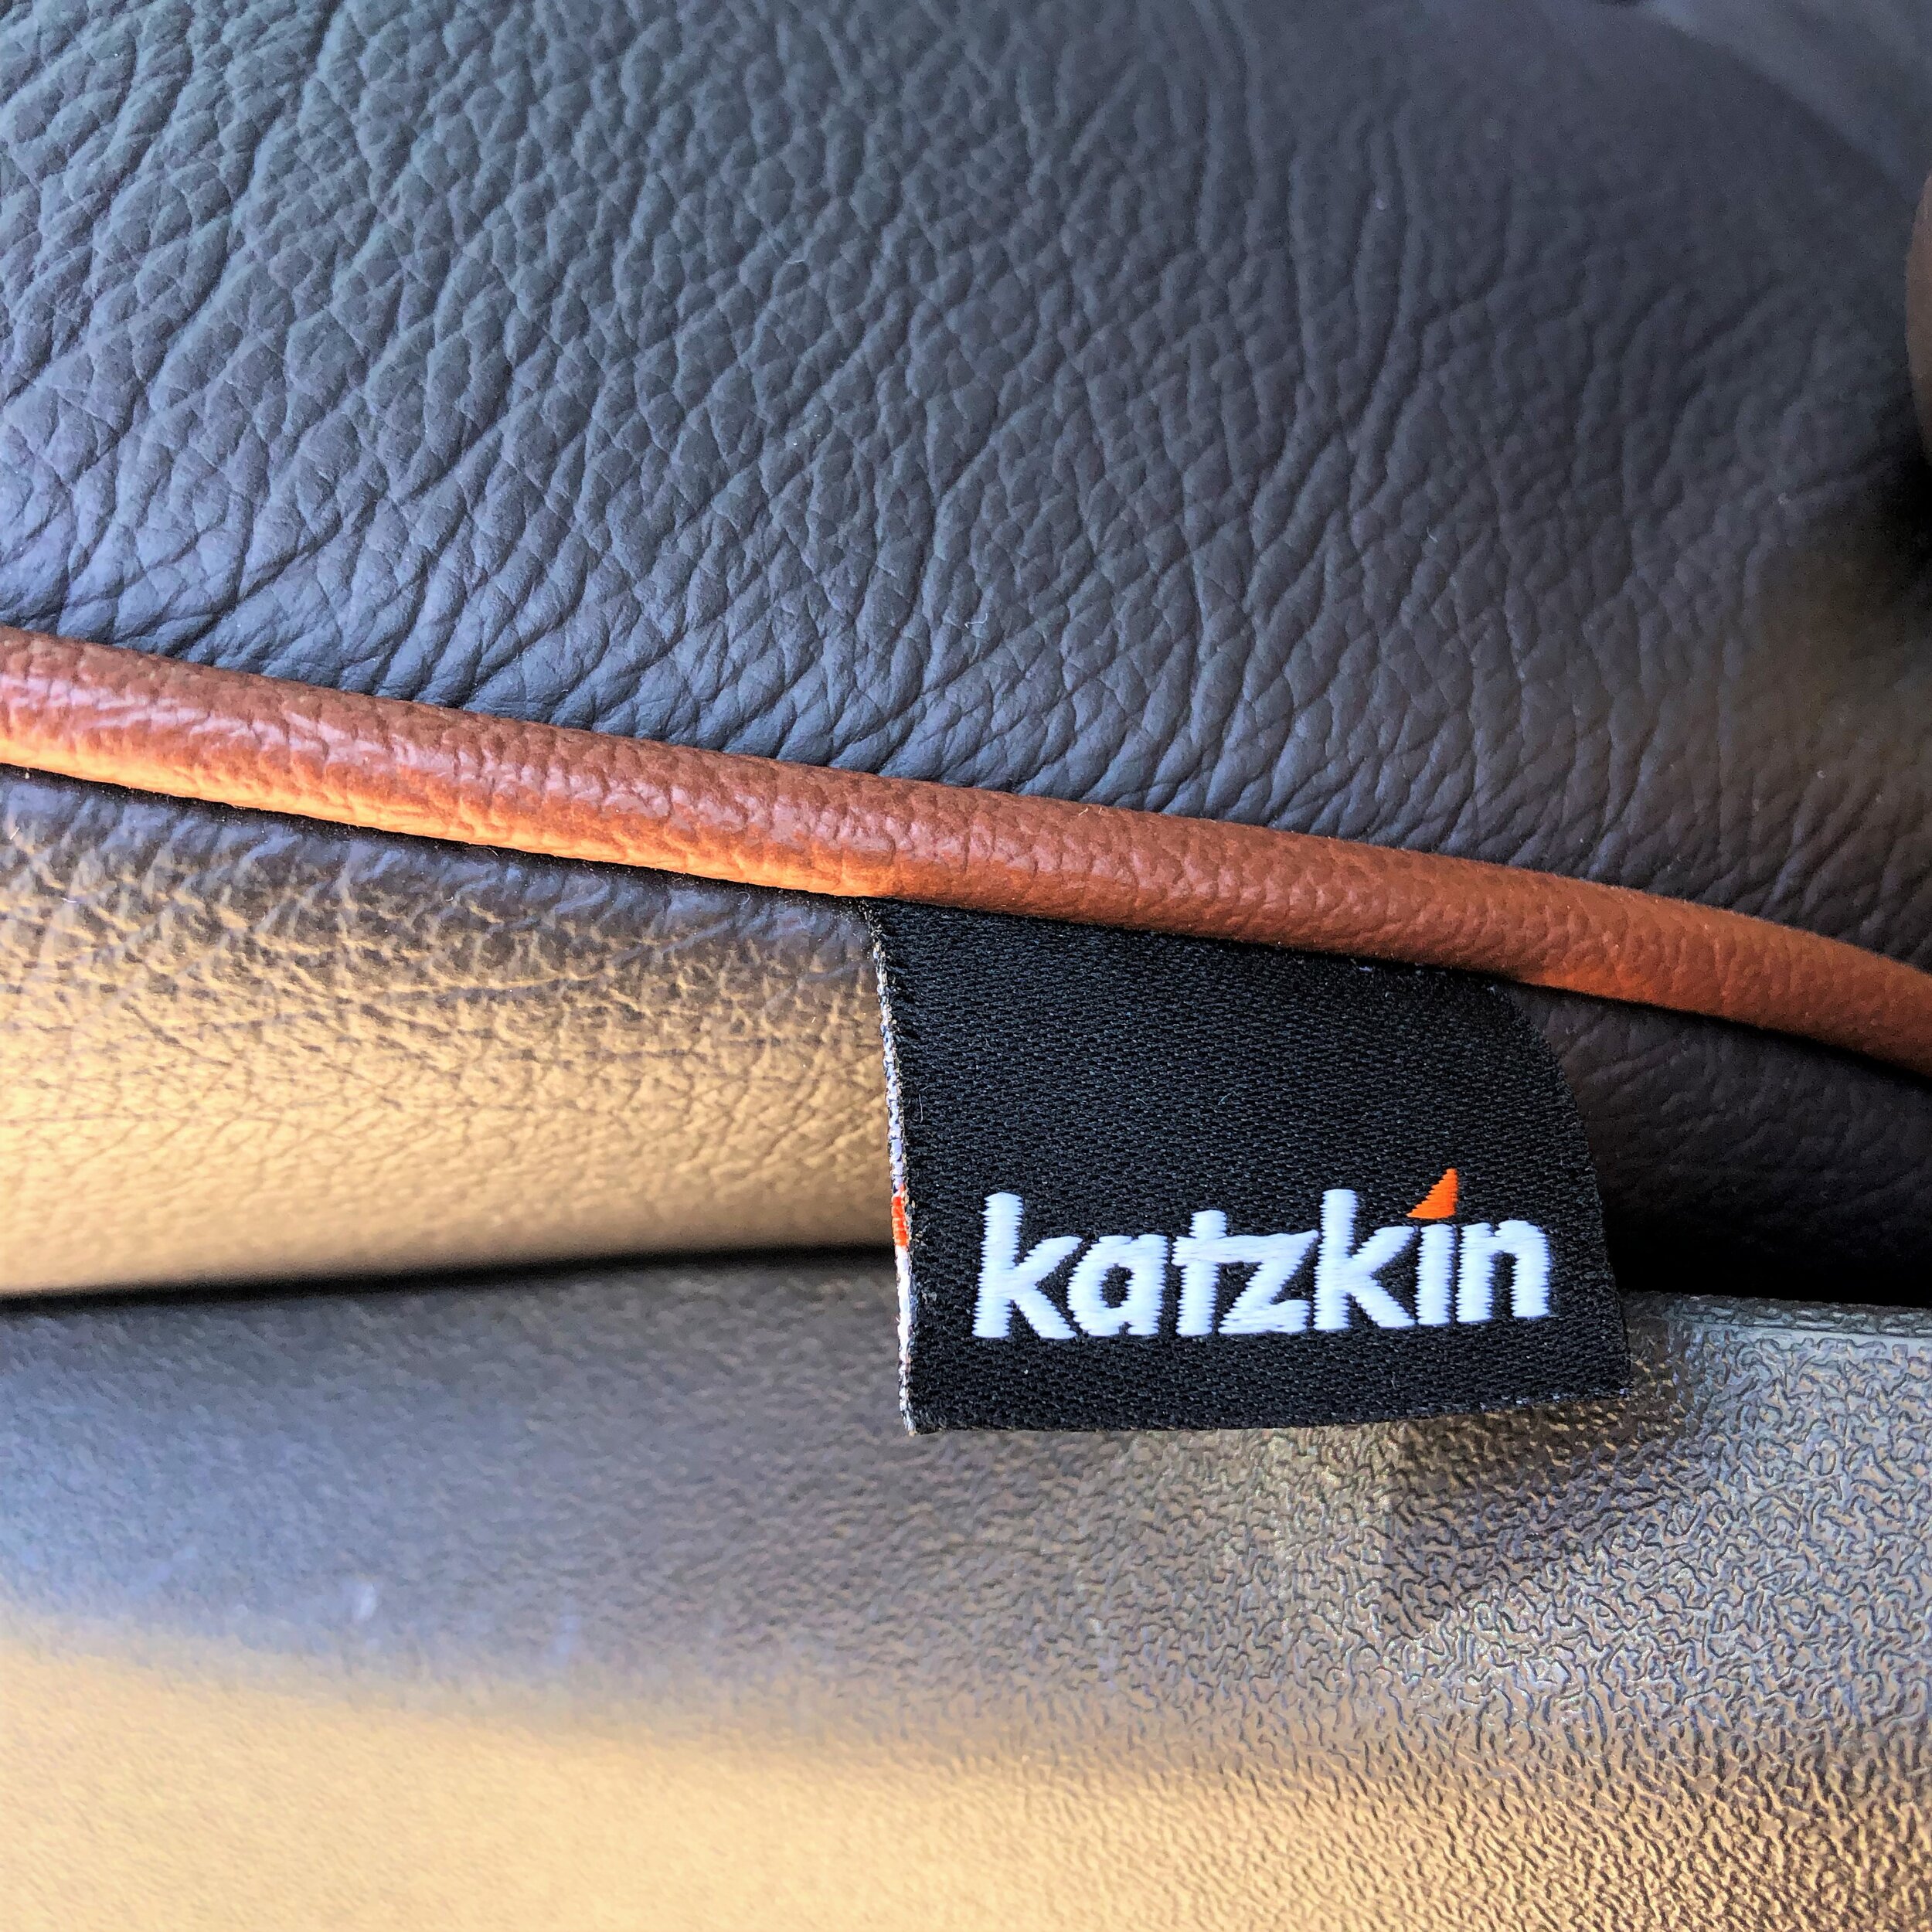 Katzkin Automotive Leather with King Series 6 Door Pickup Truck